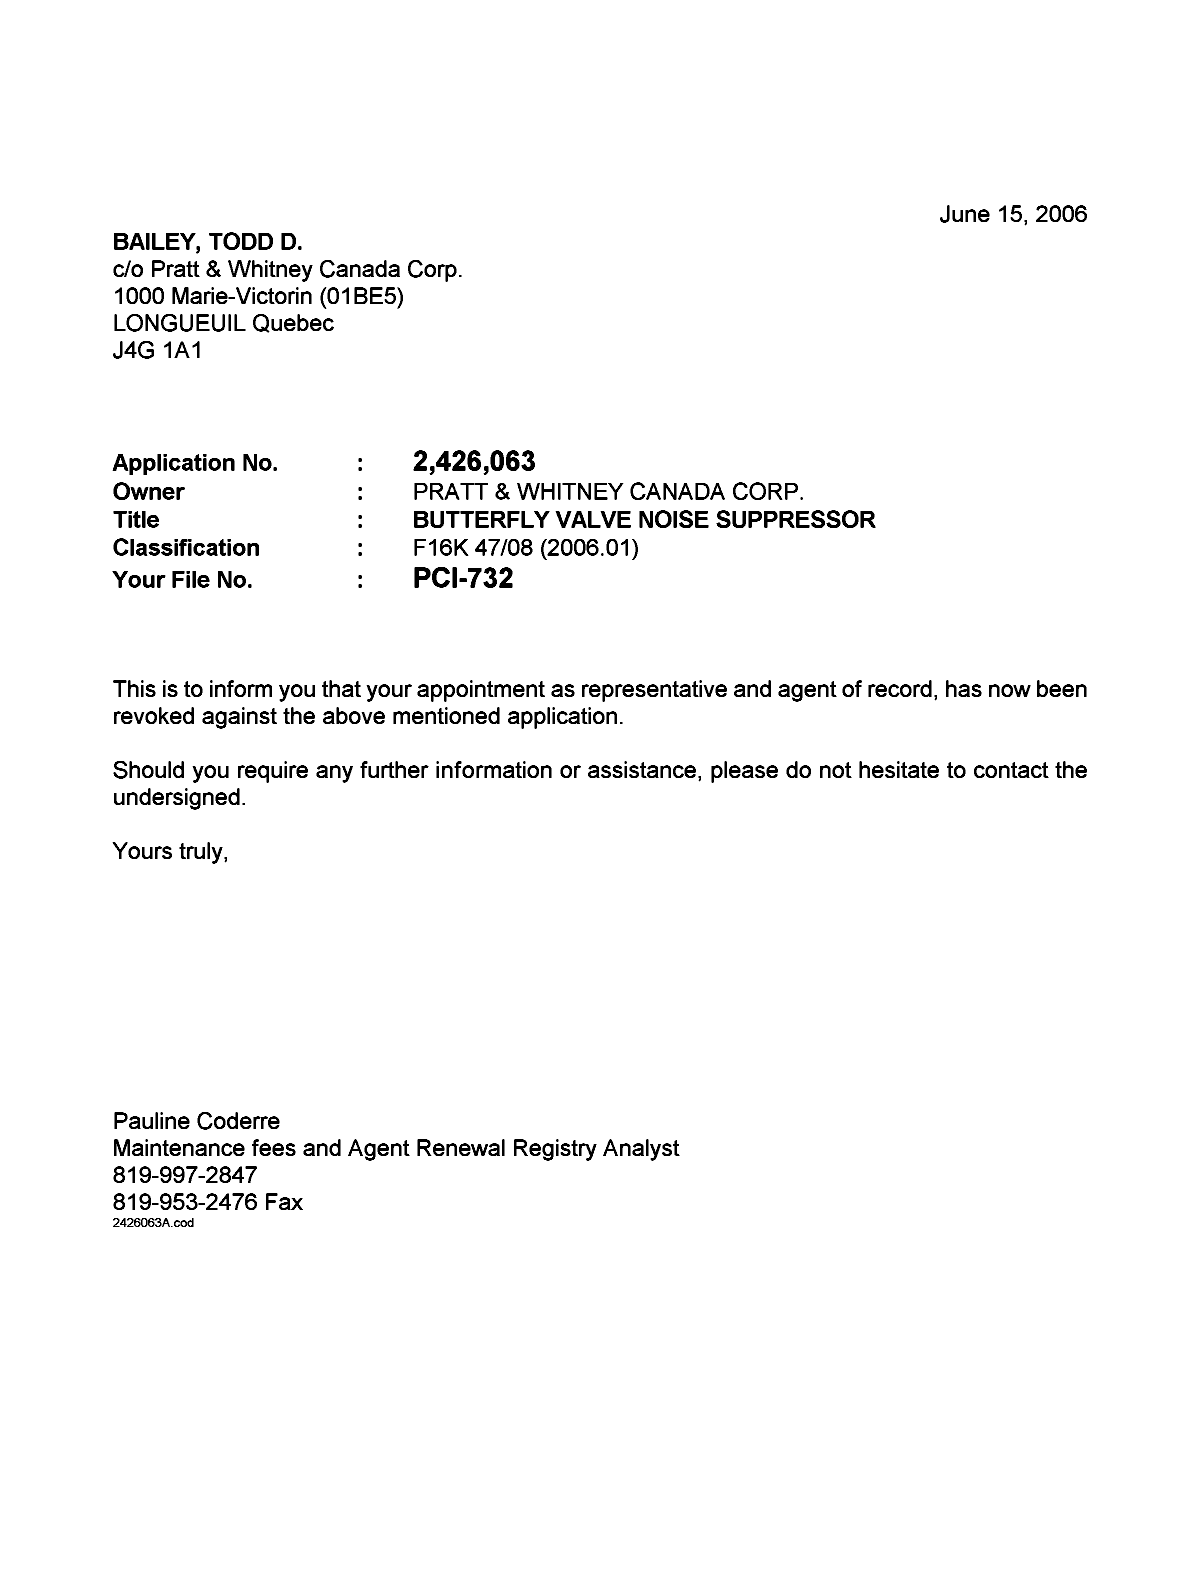 Canadian Patent Document 2426063. Correspondence 20060615. Image 1 of 1